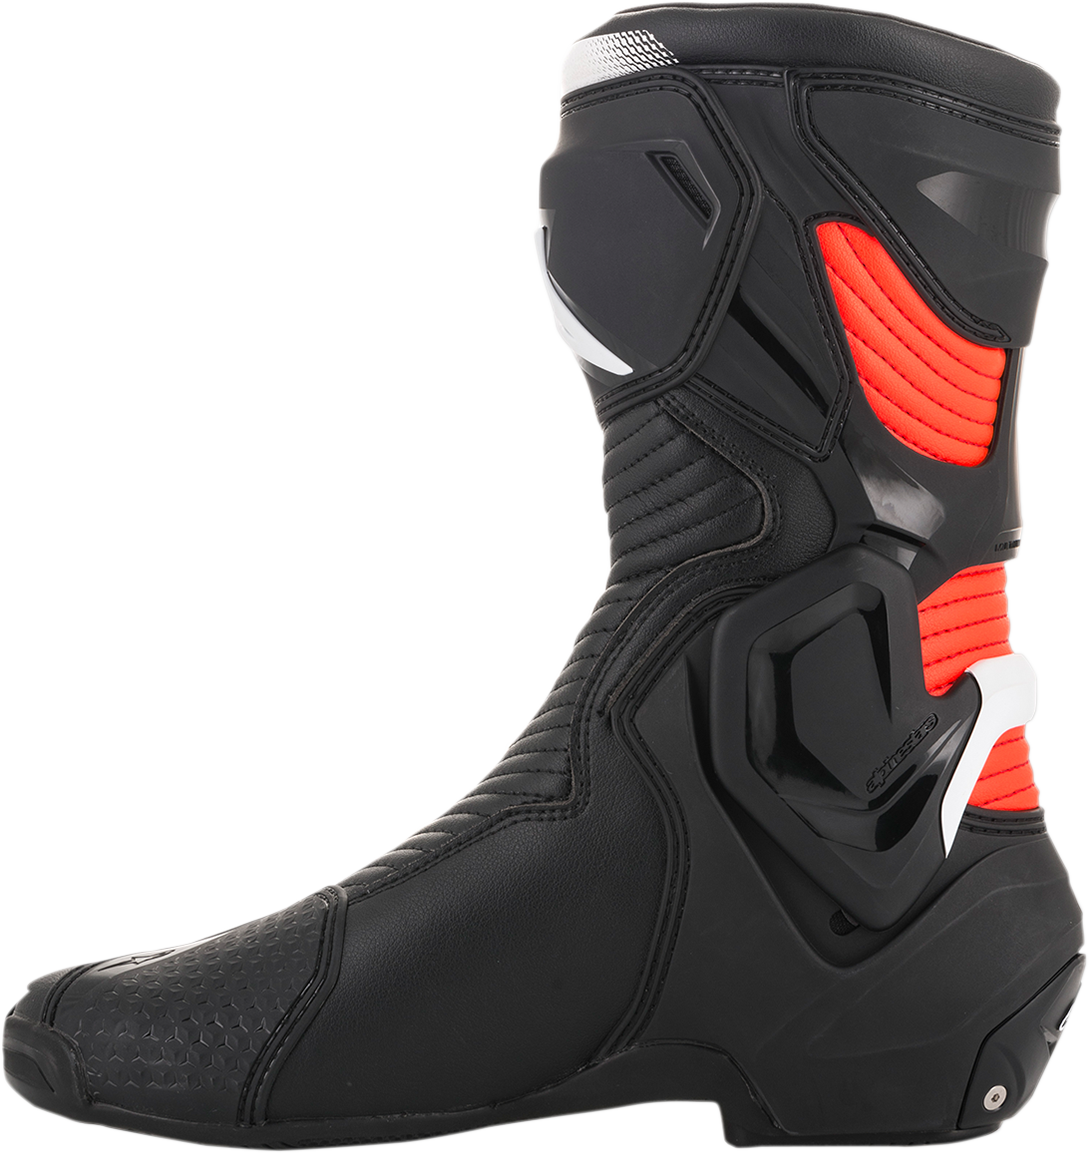 ALPINESTARS SMX+ Boots - Black/White/Red Fluorescent - US 7.5 / EU 41 2221019-1231-41